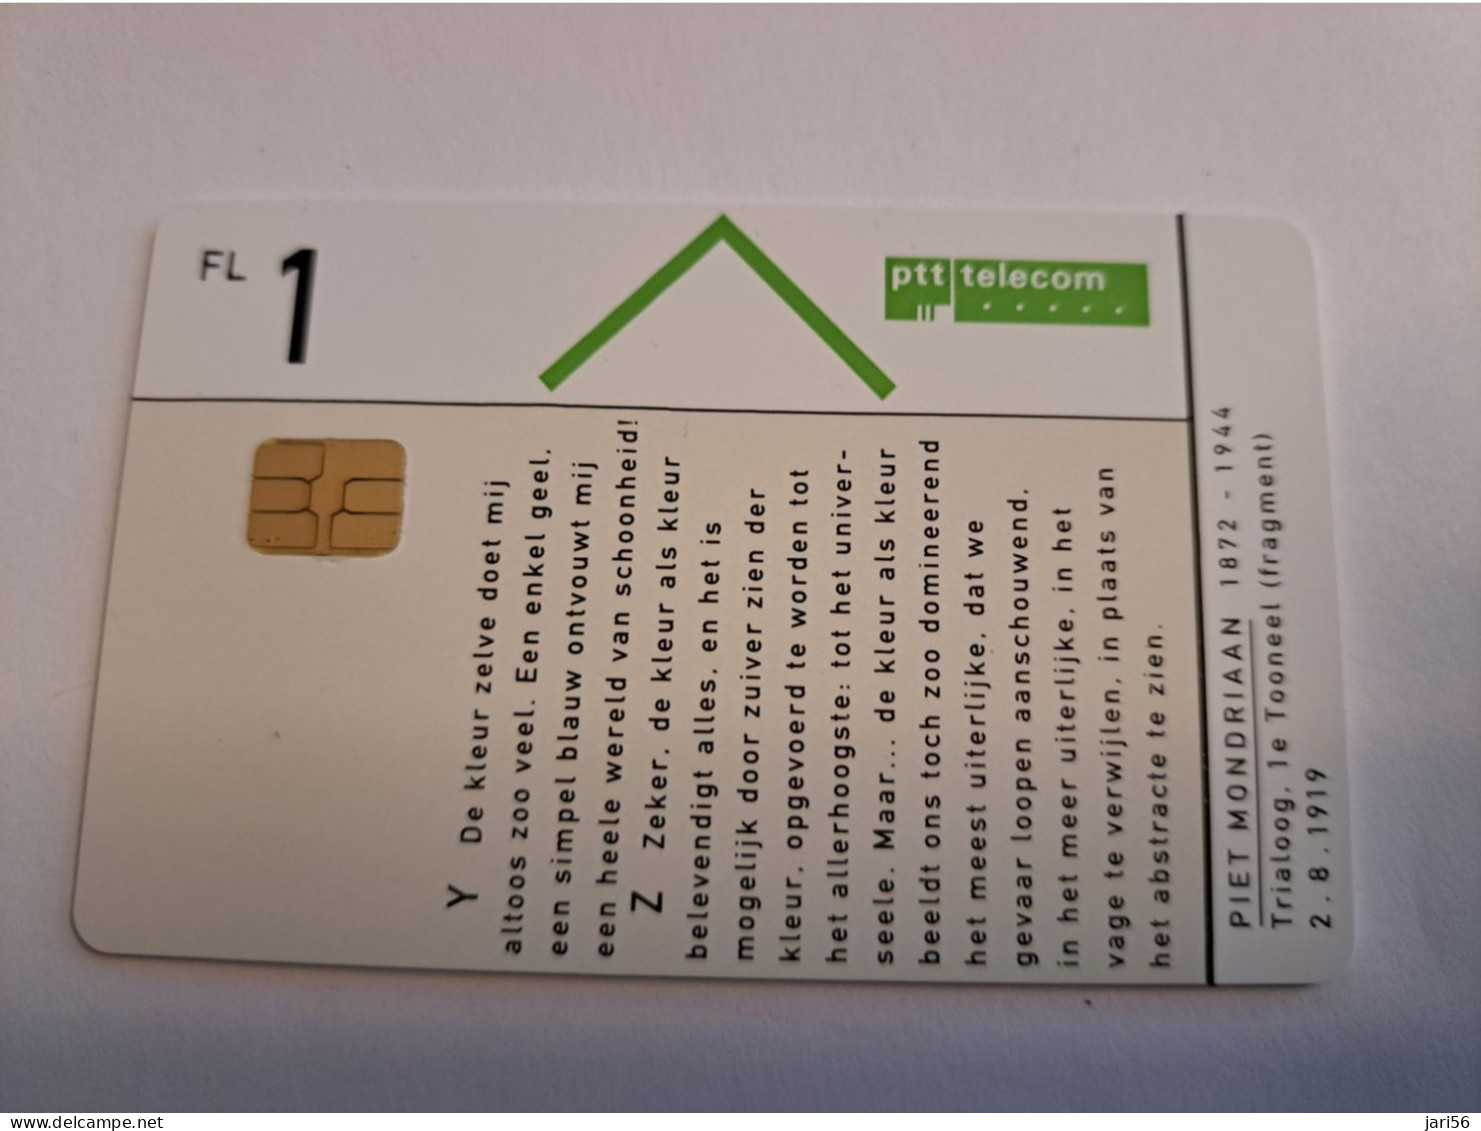 NETHERLANDS  HFL 1,00    CC  MINT CHIP CARD   / COMPLIMENTSCARD / FROM SERIE / MINT   ** 15956** - GSM-Kaarten, Bijvulling & Vooraf Betaalde